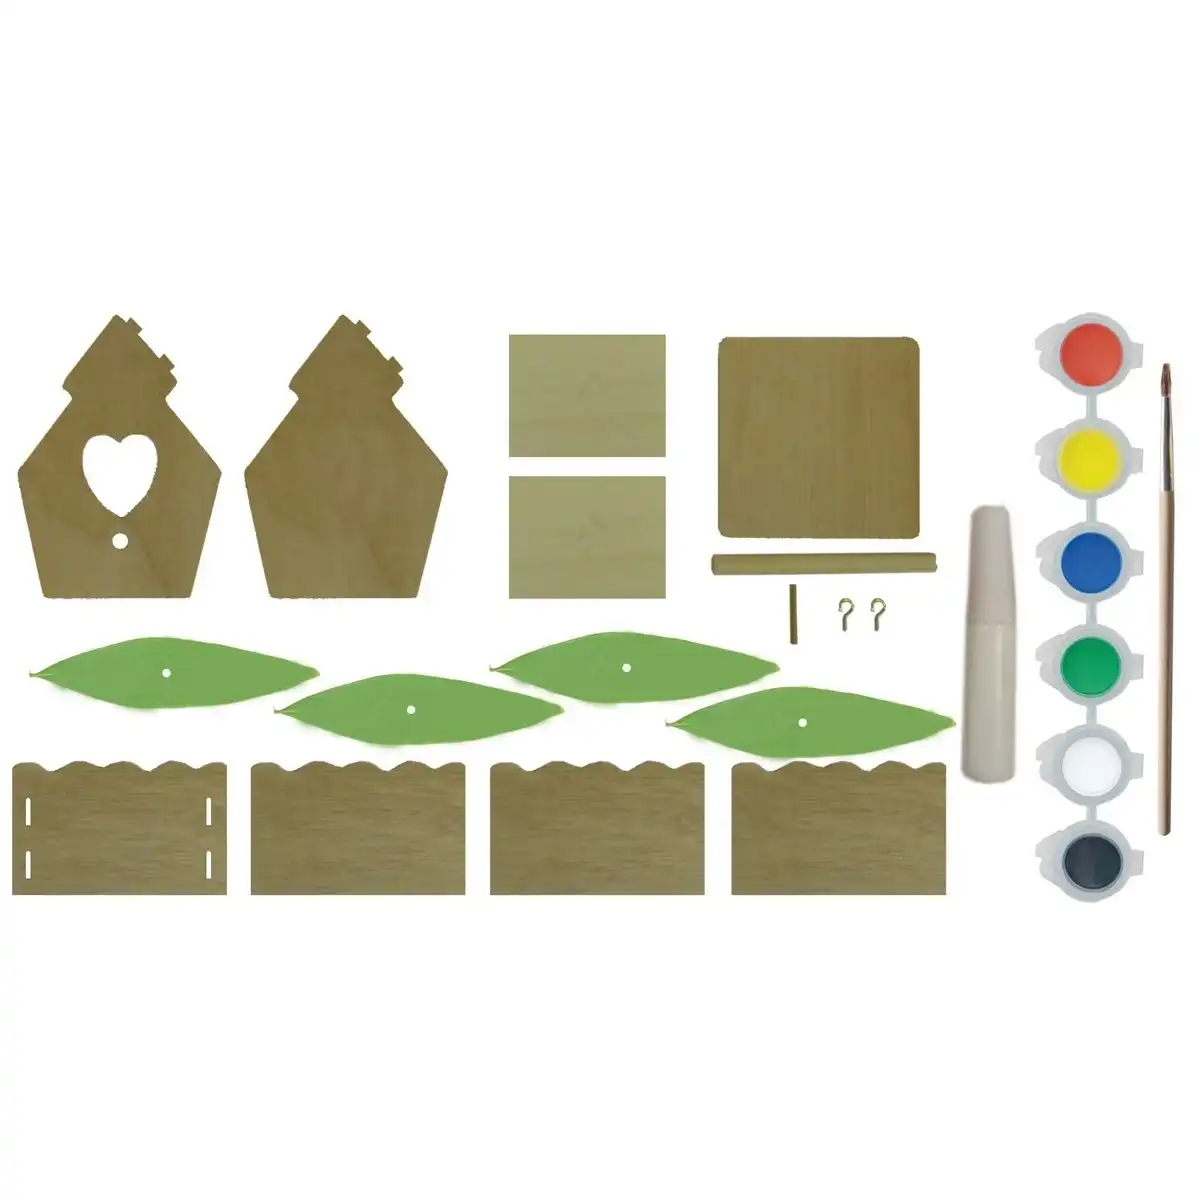 Boyle Crafty Kits Build & Paint Wooden Birdhouse Kids/Children Activity Toy 5y+